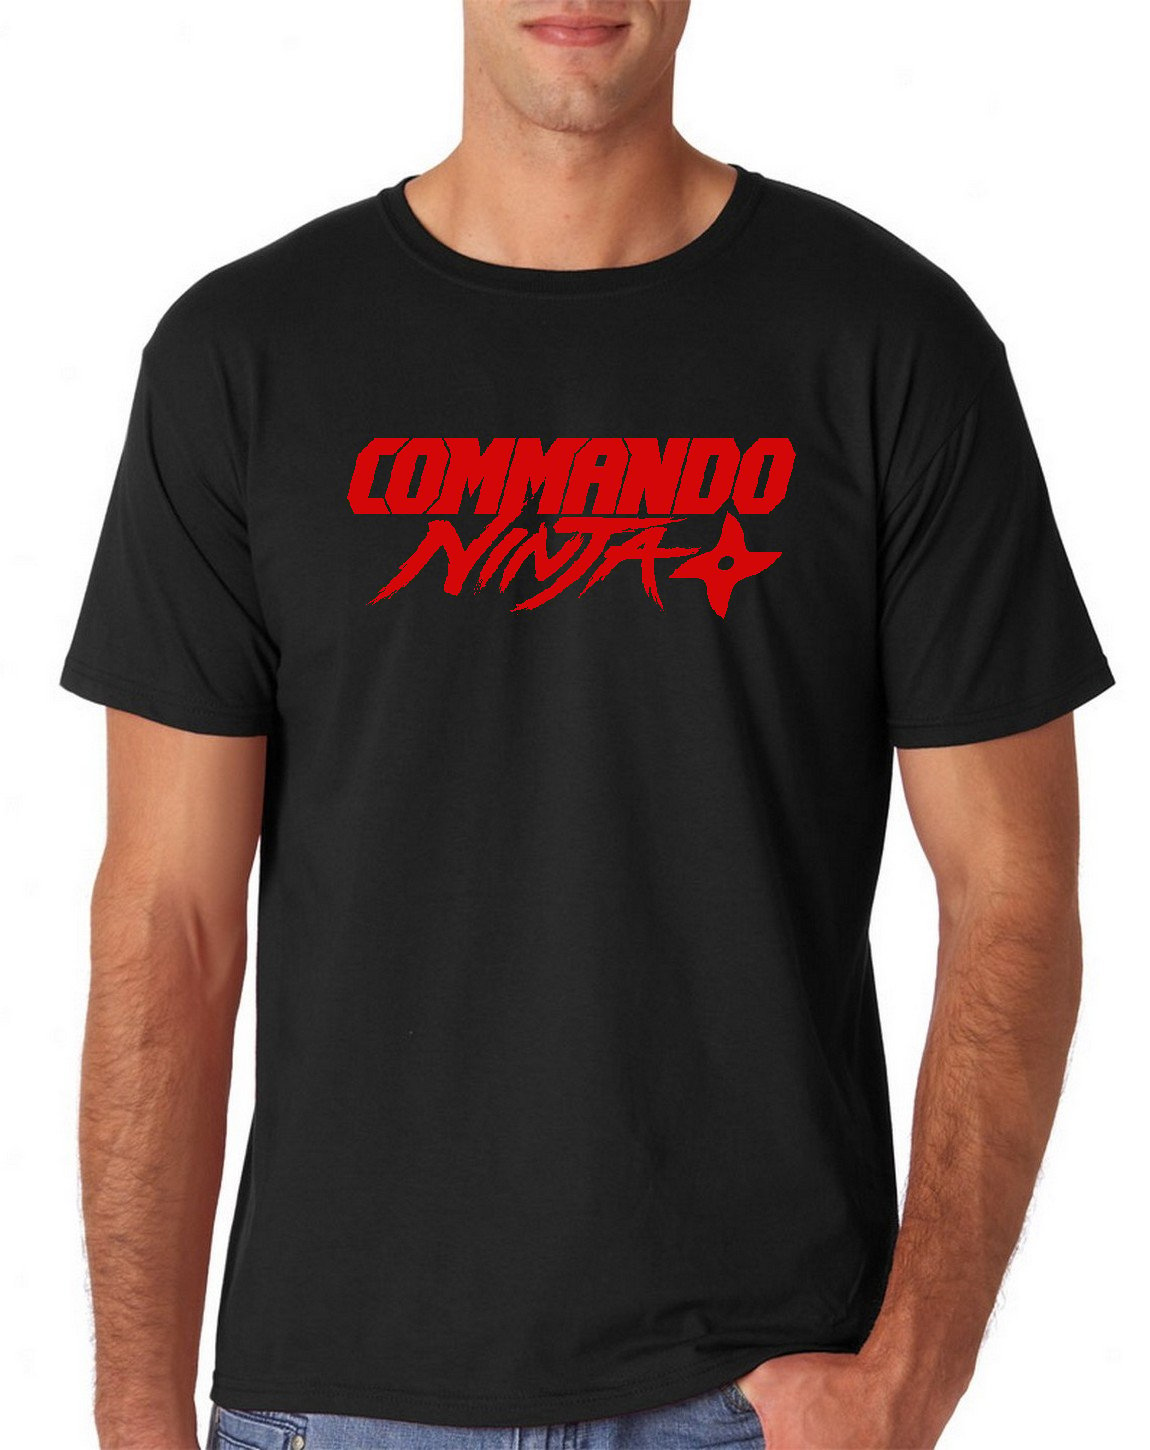 Image of Commando Ninja Black Tee Shirt